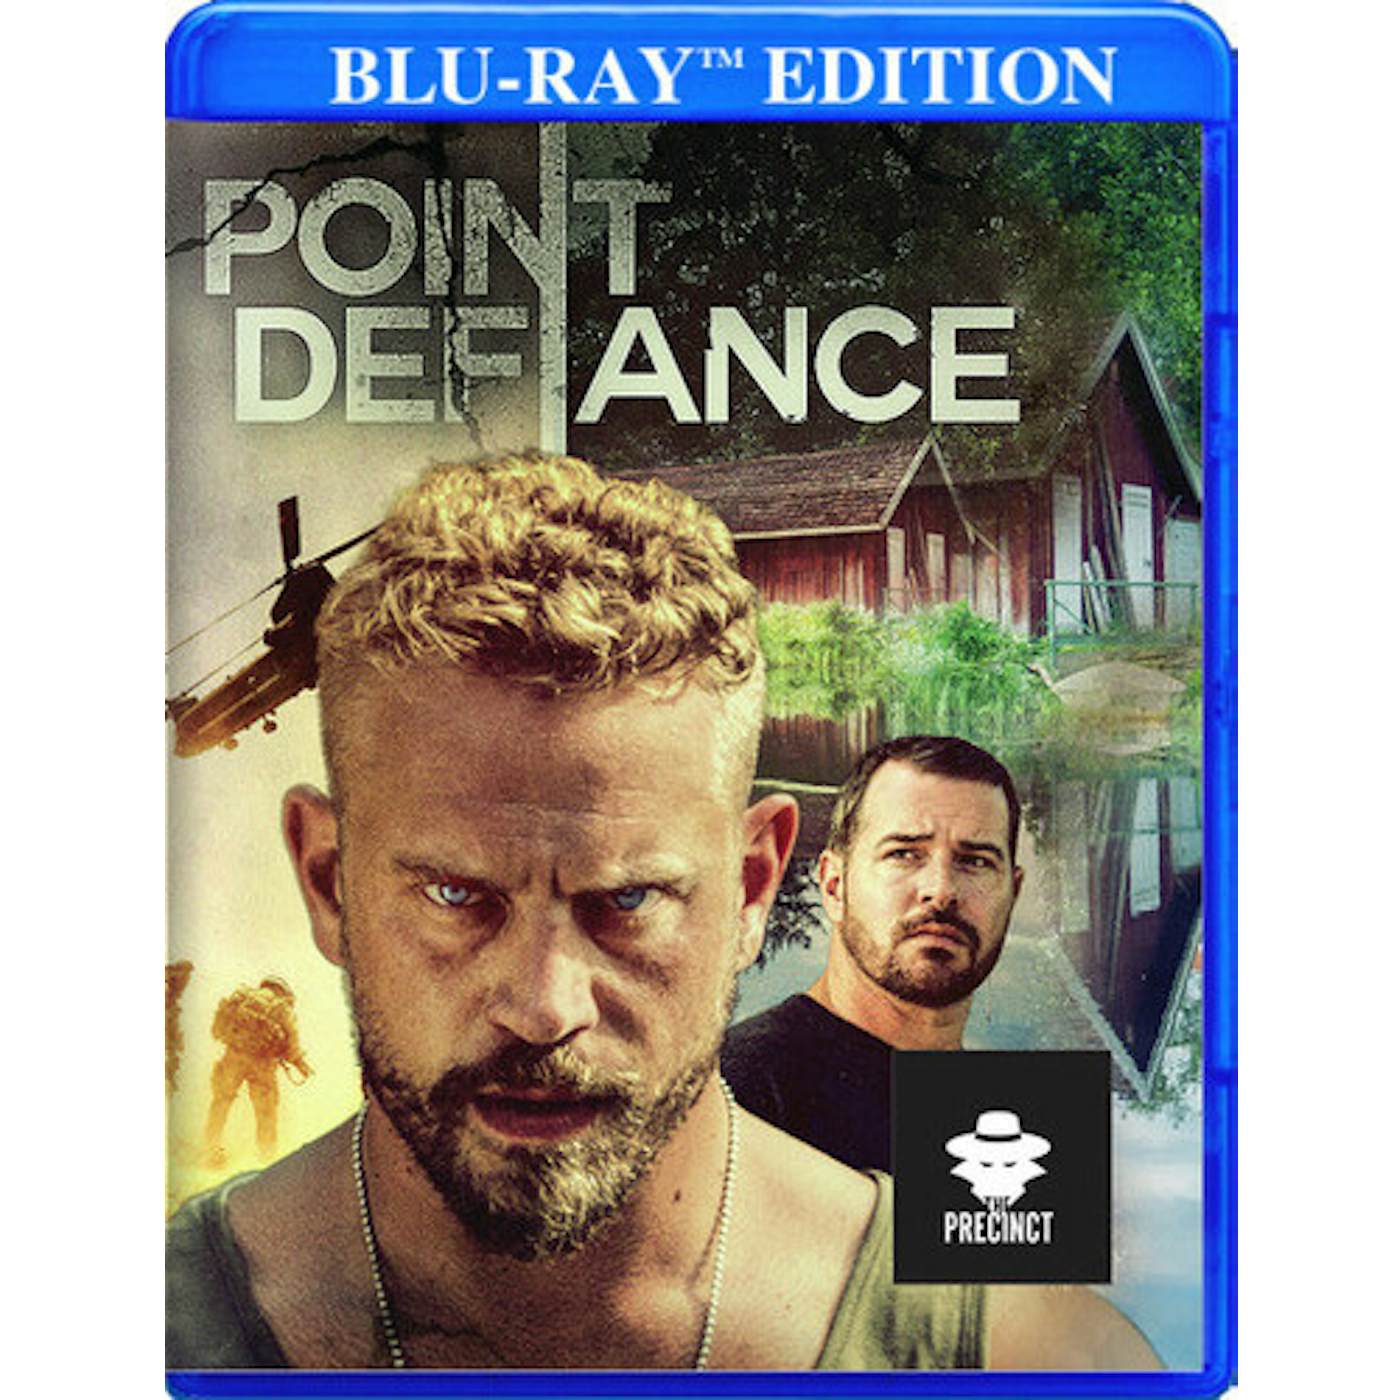 POINT DEFIANCE Blu-ray